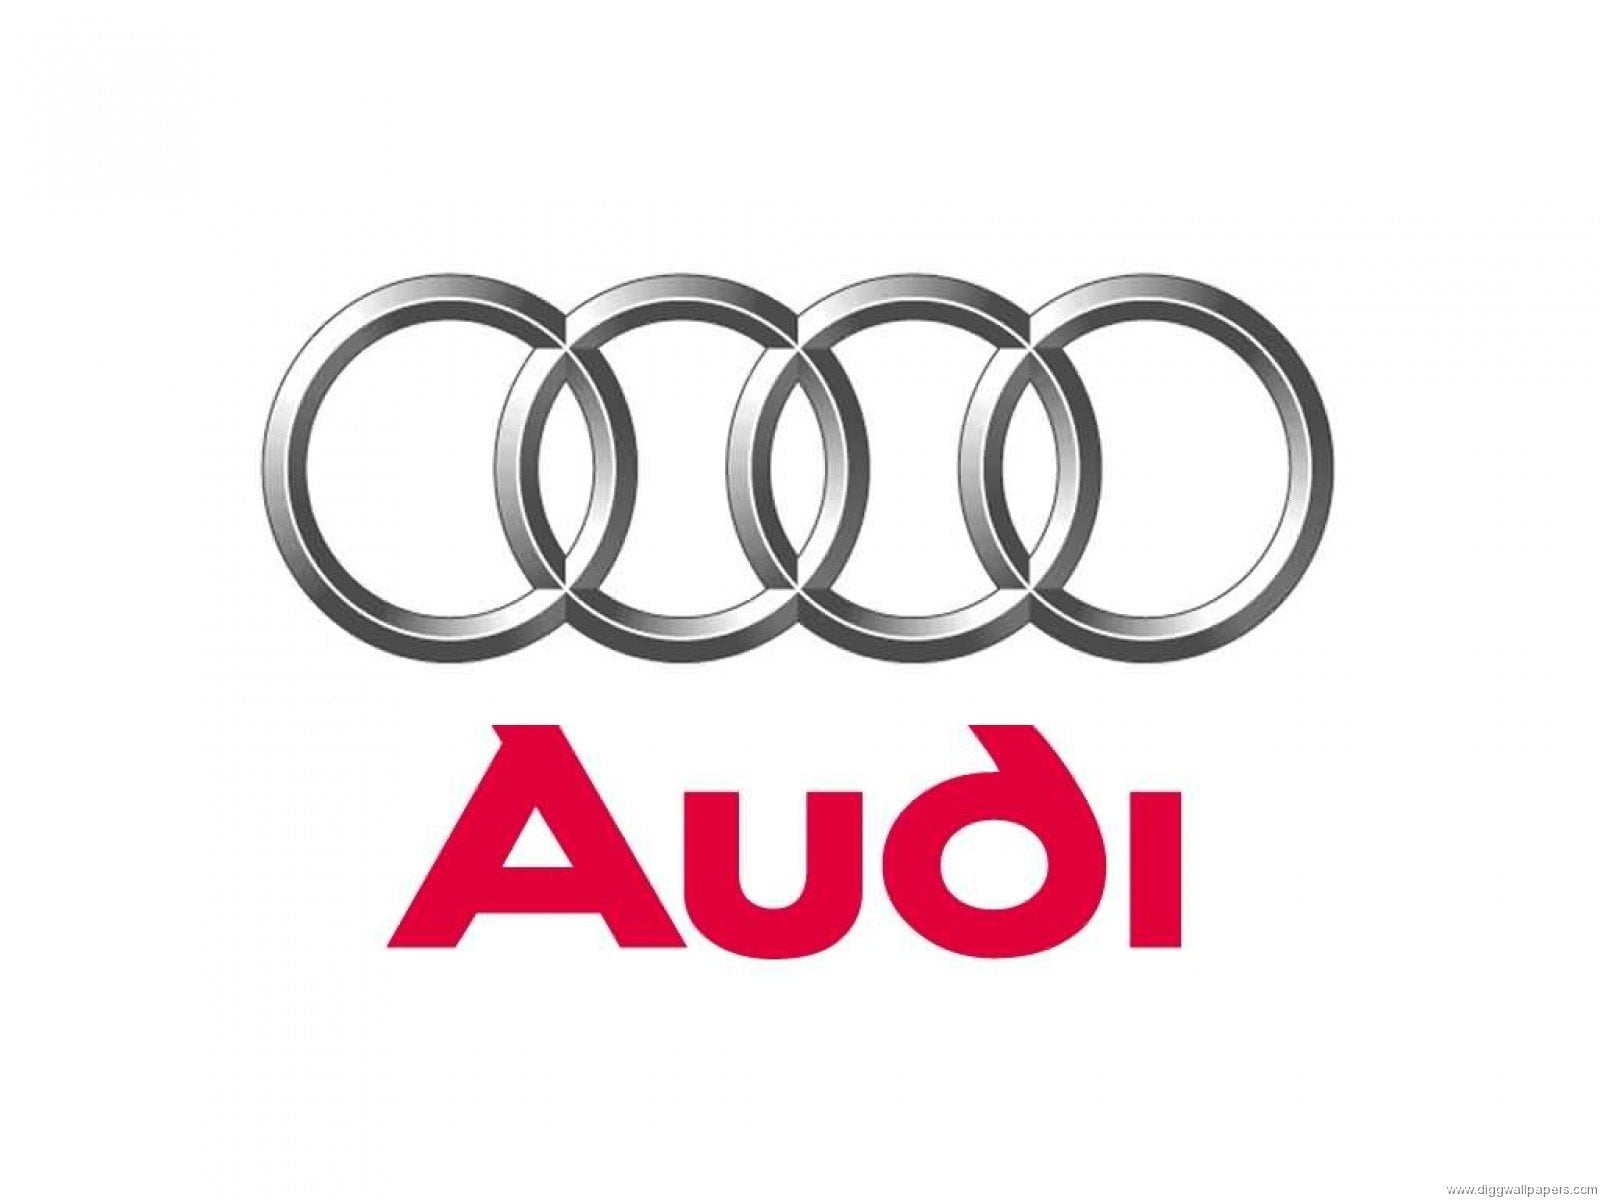 Audi emblem, logo, AUDI AG 85045 Ingolstadt, Audi, brand, … | Flickr